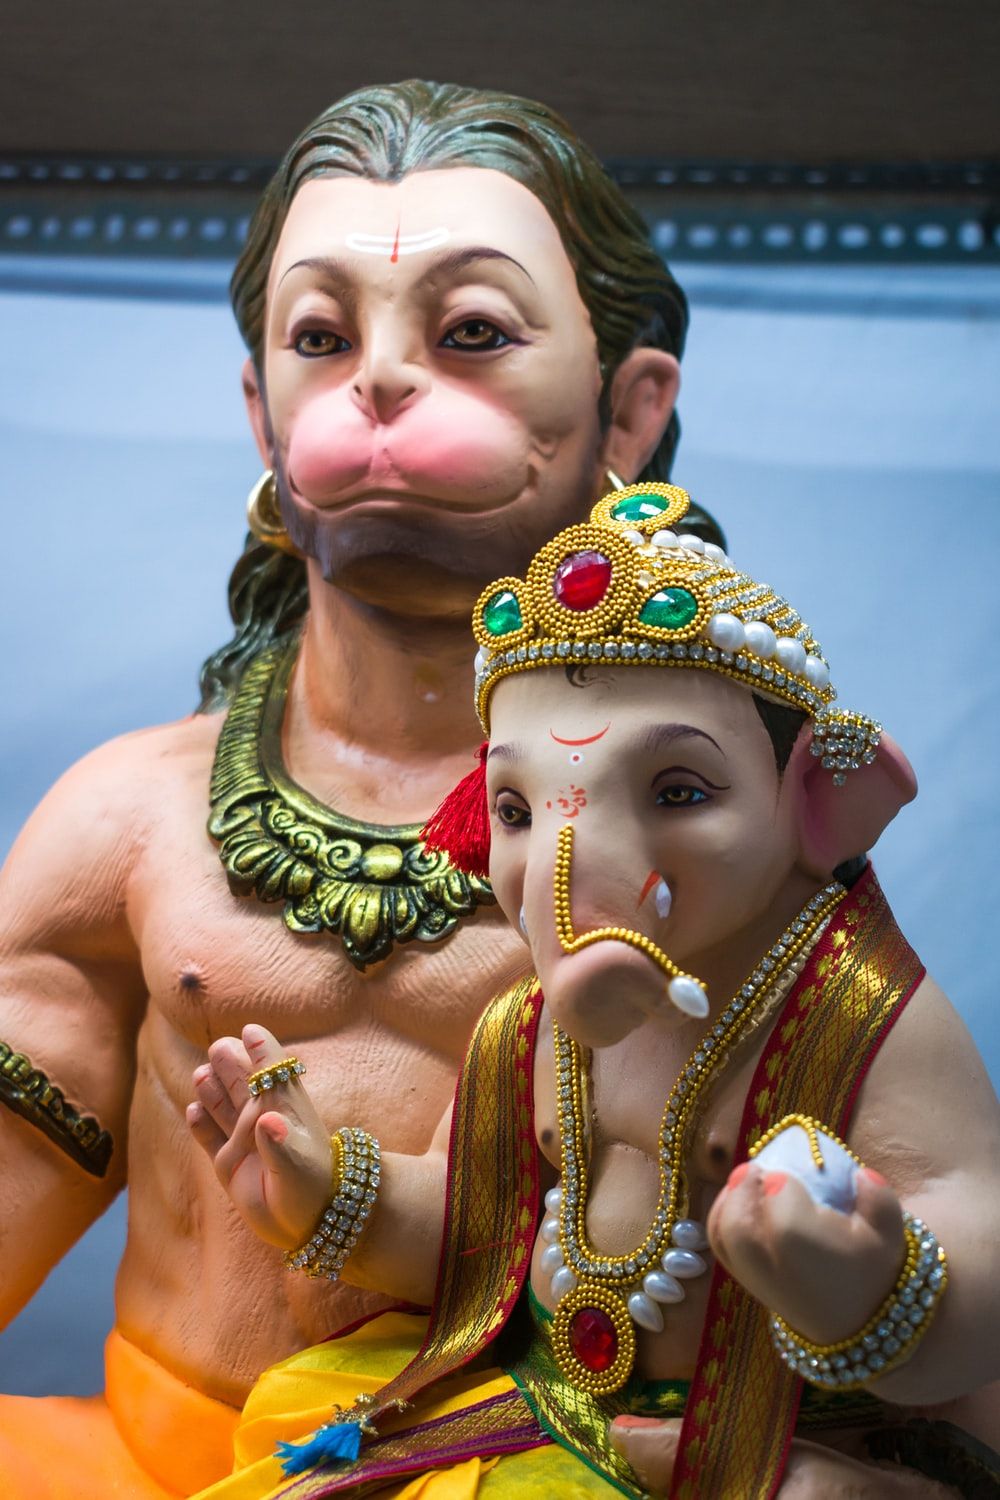 1K+ Lord Hanuman Picture. Download Free Image